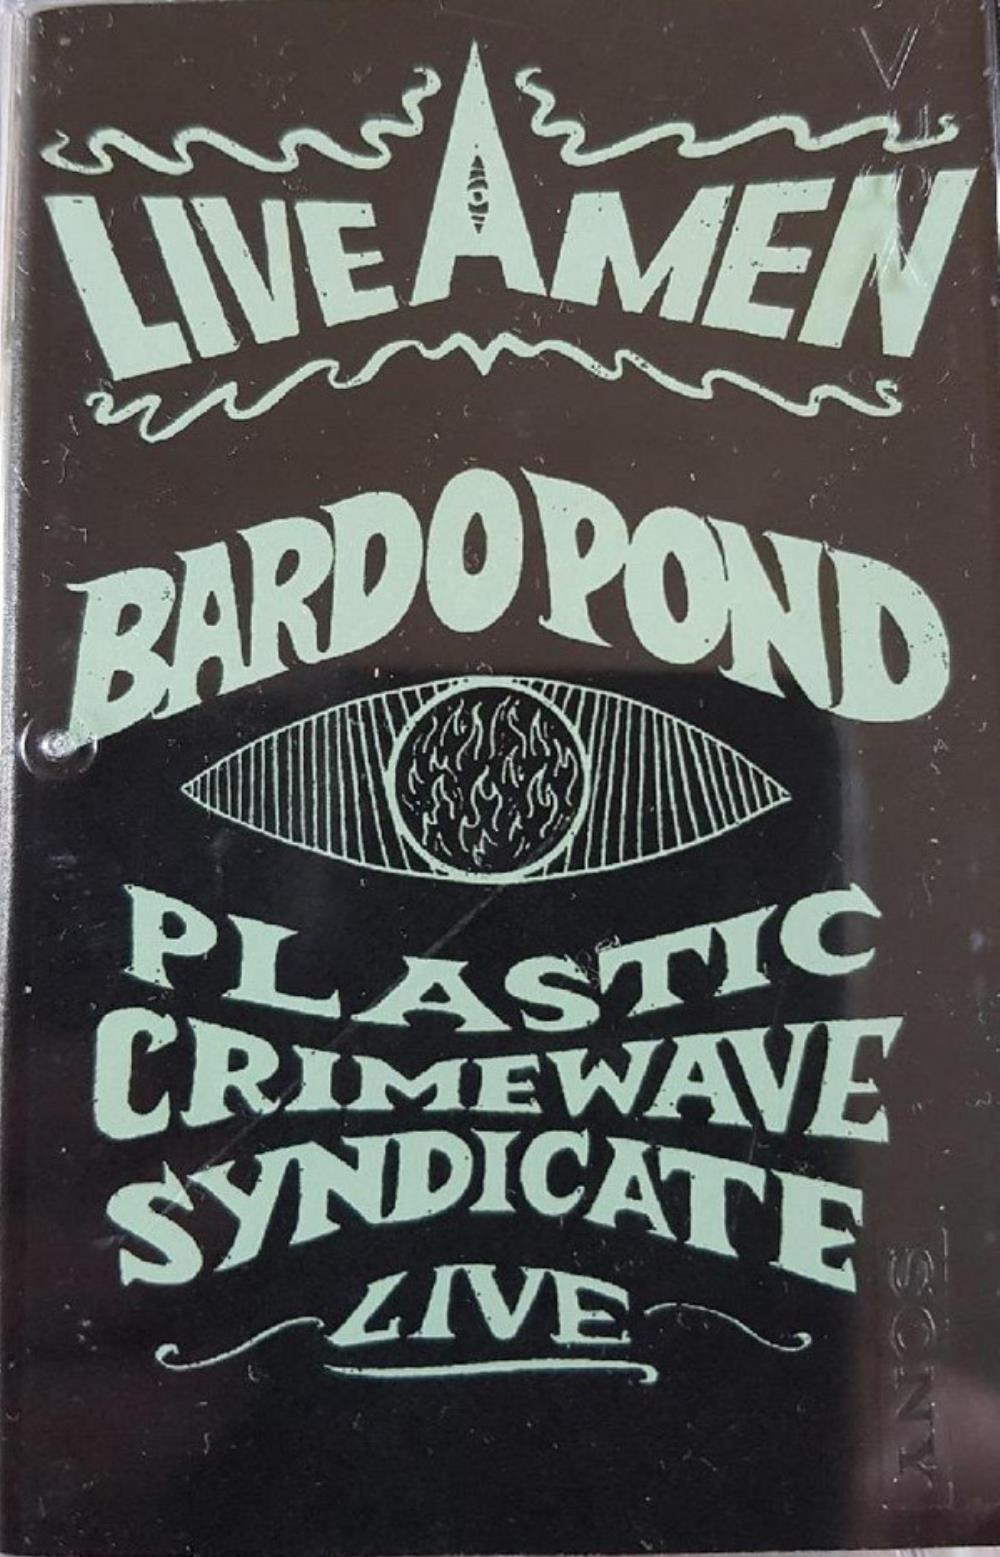 Bardo Pond - Live Amen (w/Plastic Crimewave Syndicate) CD (album) cover